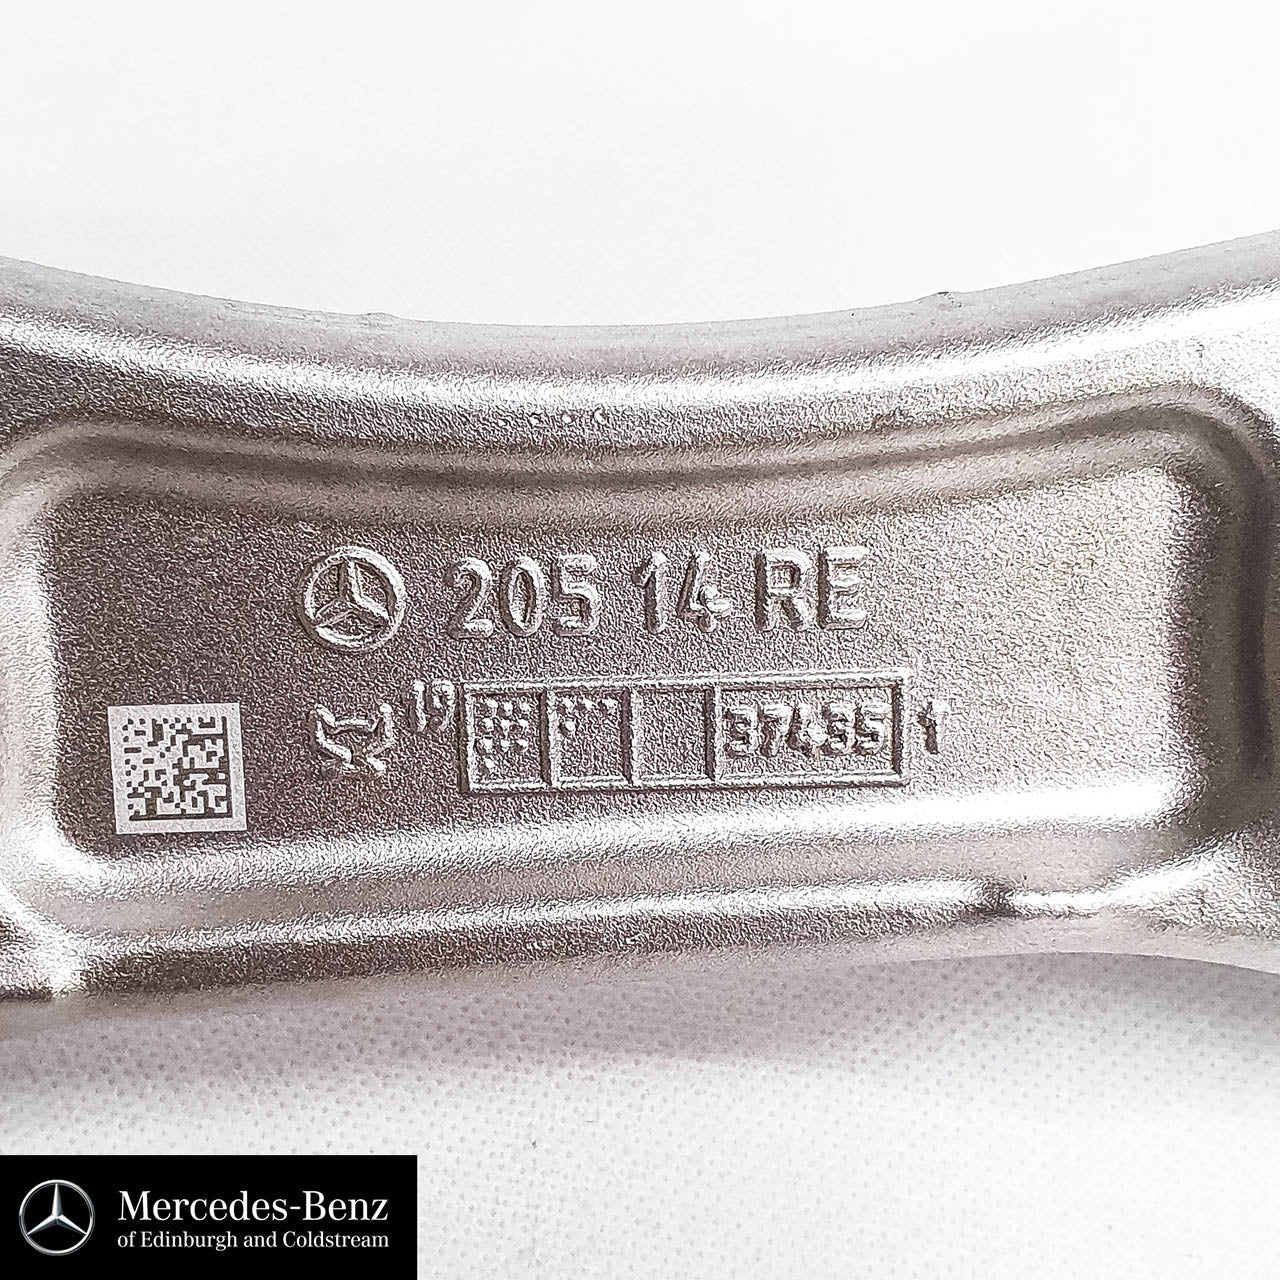 Genuine Mercedes-Benz C Class, E Class, CLS models Control Arm - Spring Link